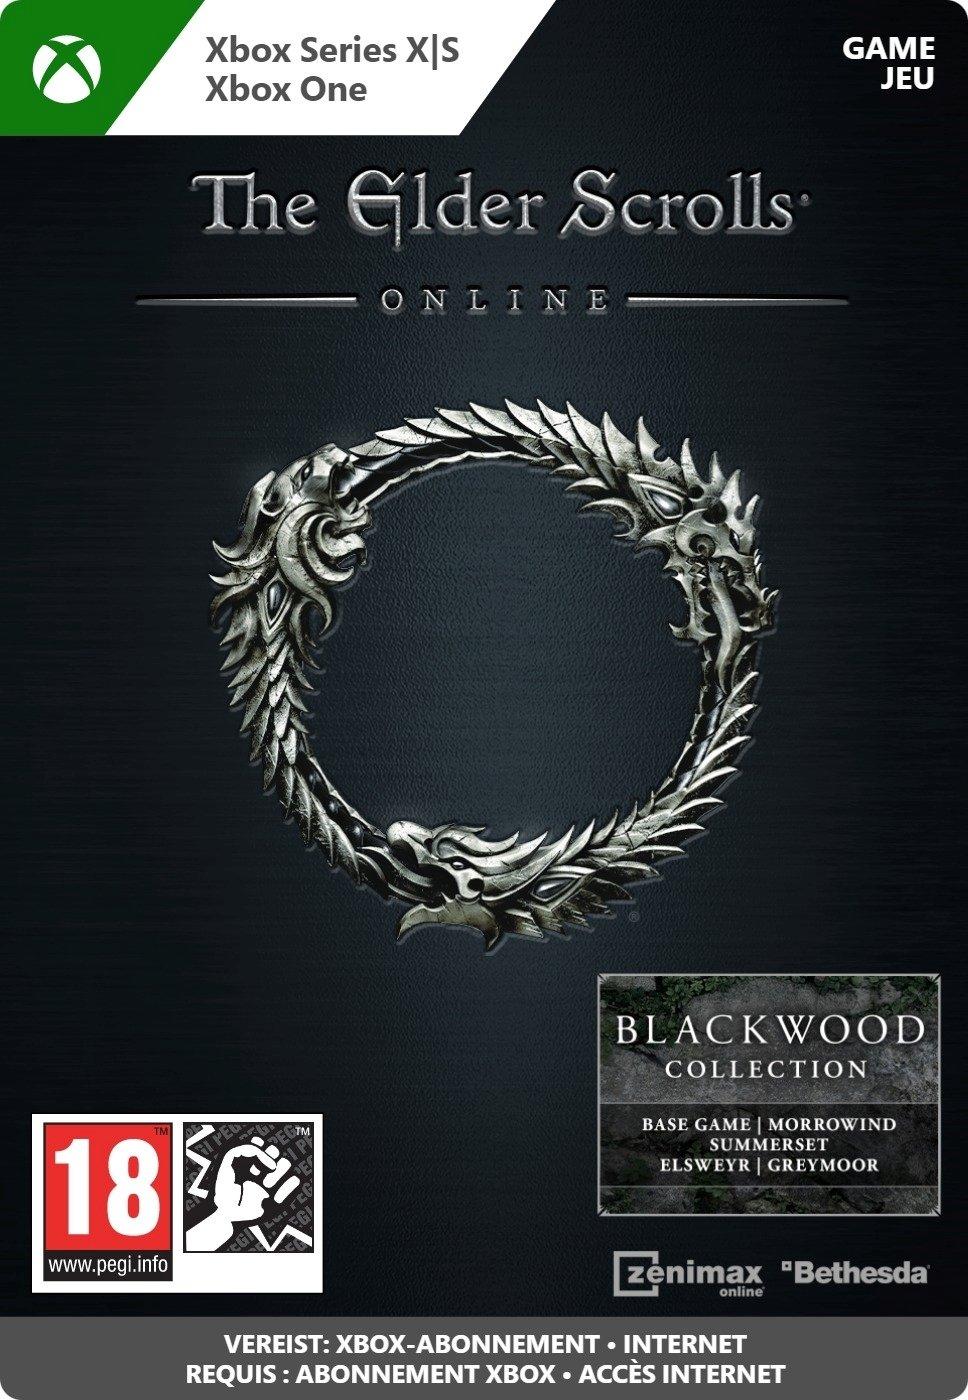 The Elder Scrolls Online Collection: Blackwood - Xbox Series X/Xbox One - Game | G7Q-00150 (8283755f-0072-7245-850a-498f0abdf3e7)